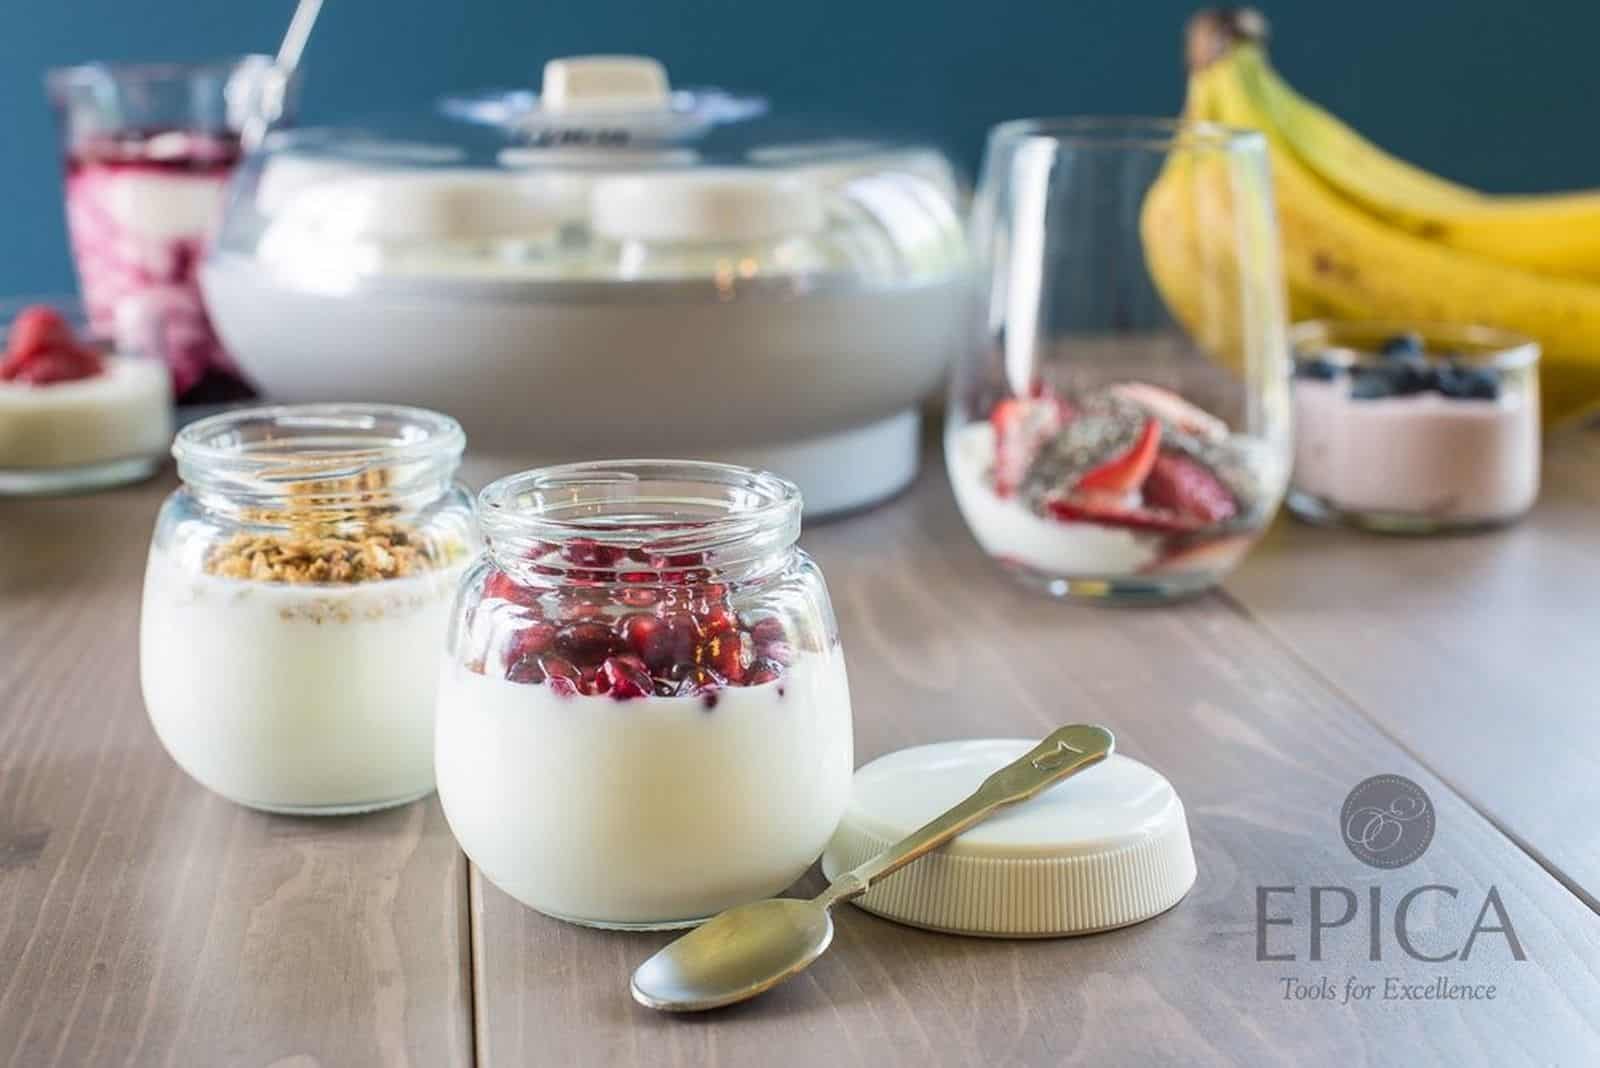 Epica Yogurt Maker Display 2